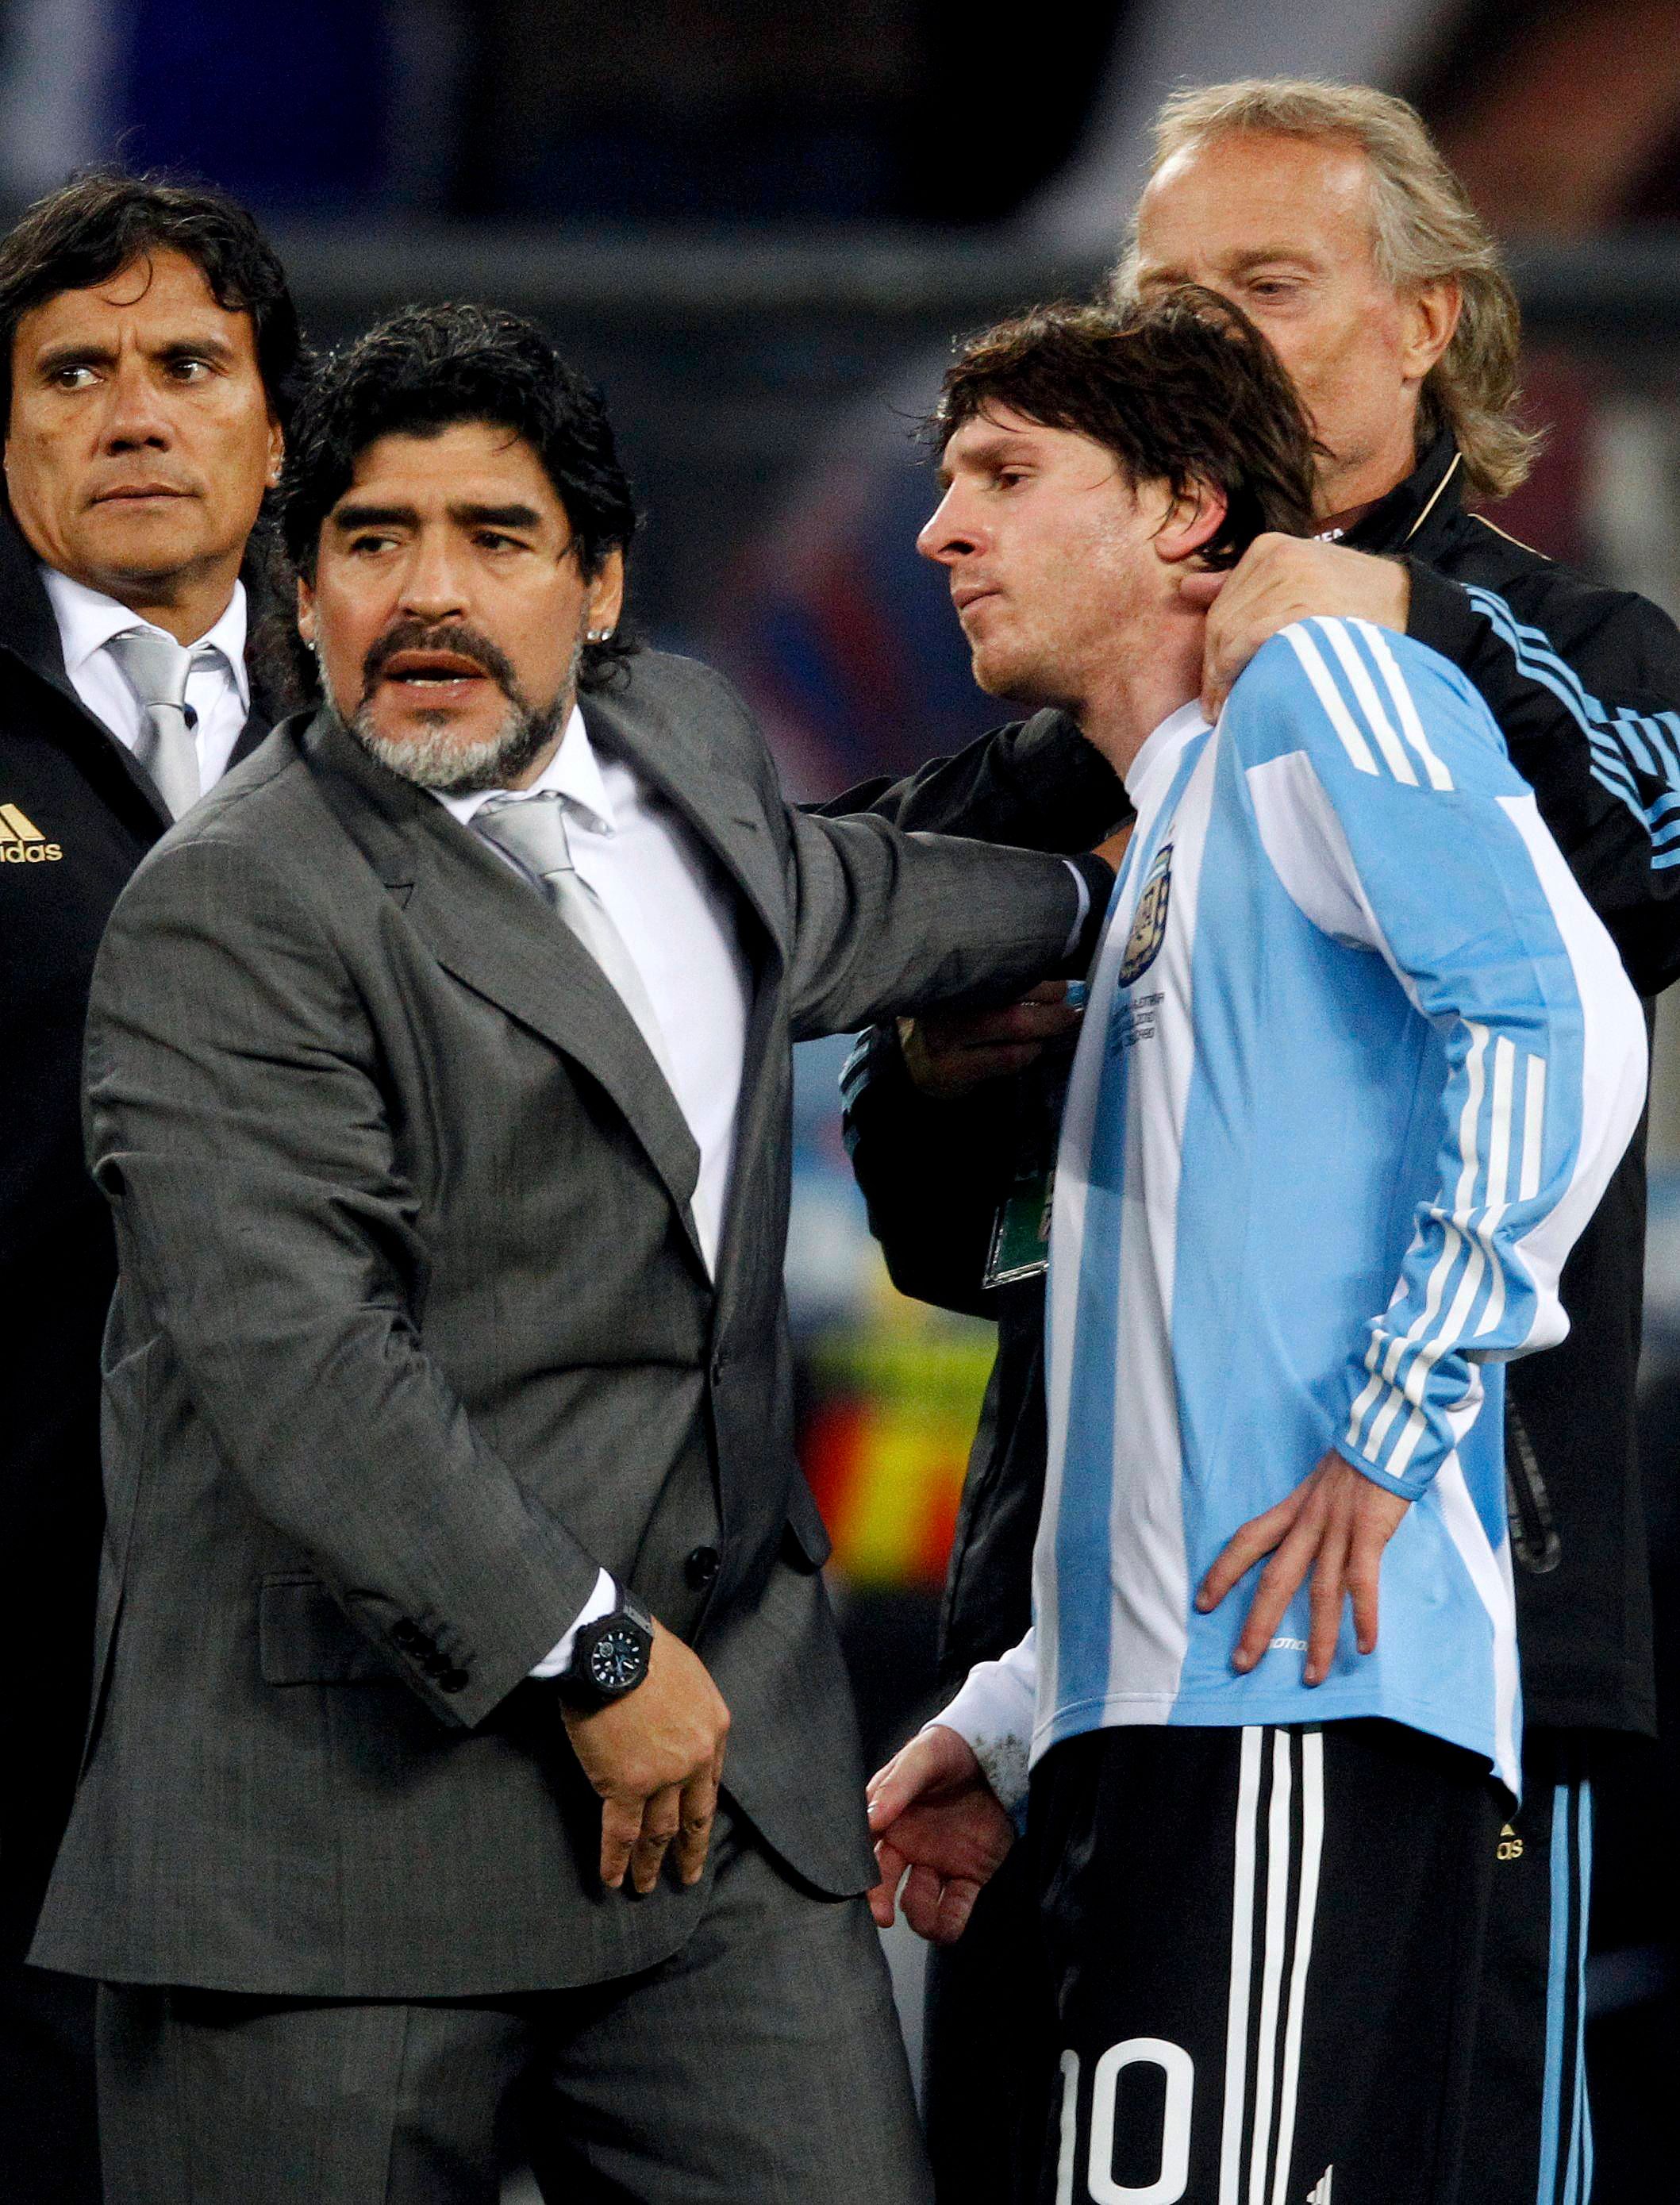 Maradona and Messi at the 2010 World Cup.